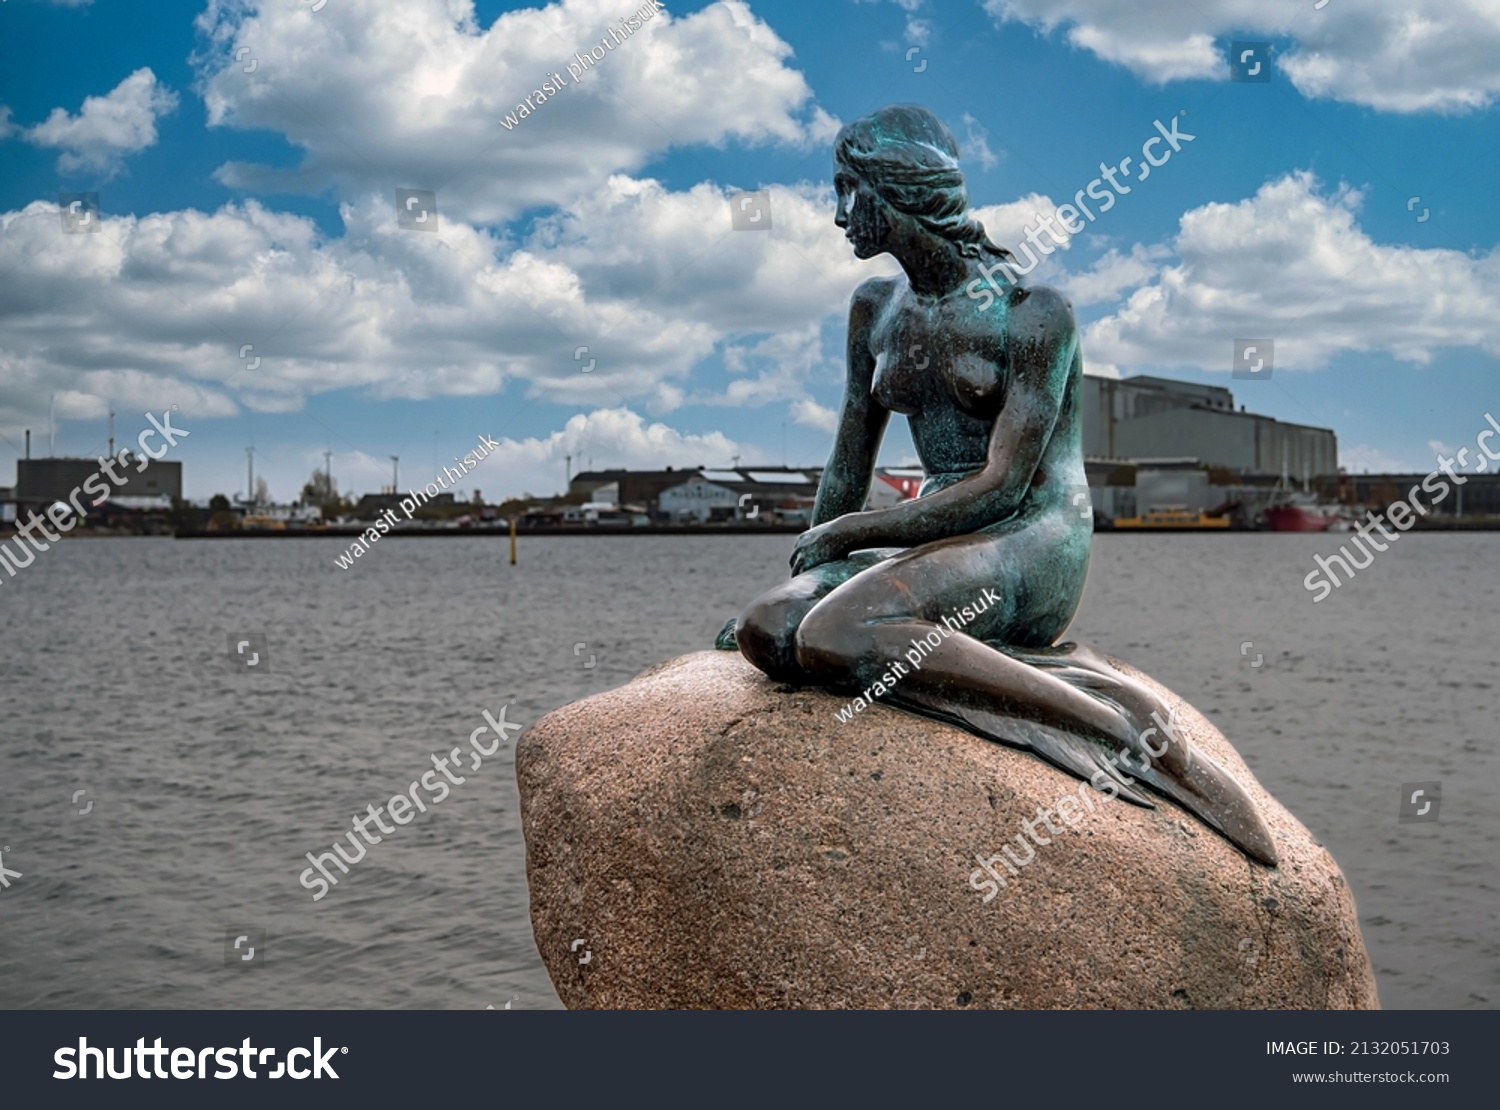 2,204 Denmark mermaid Images, Stock Photos & Vectors | Shutterstock